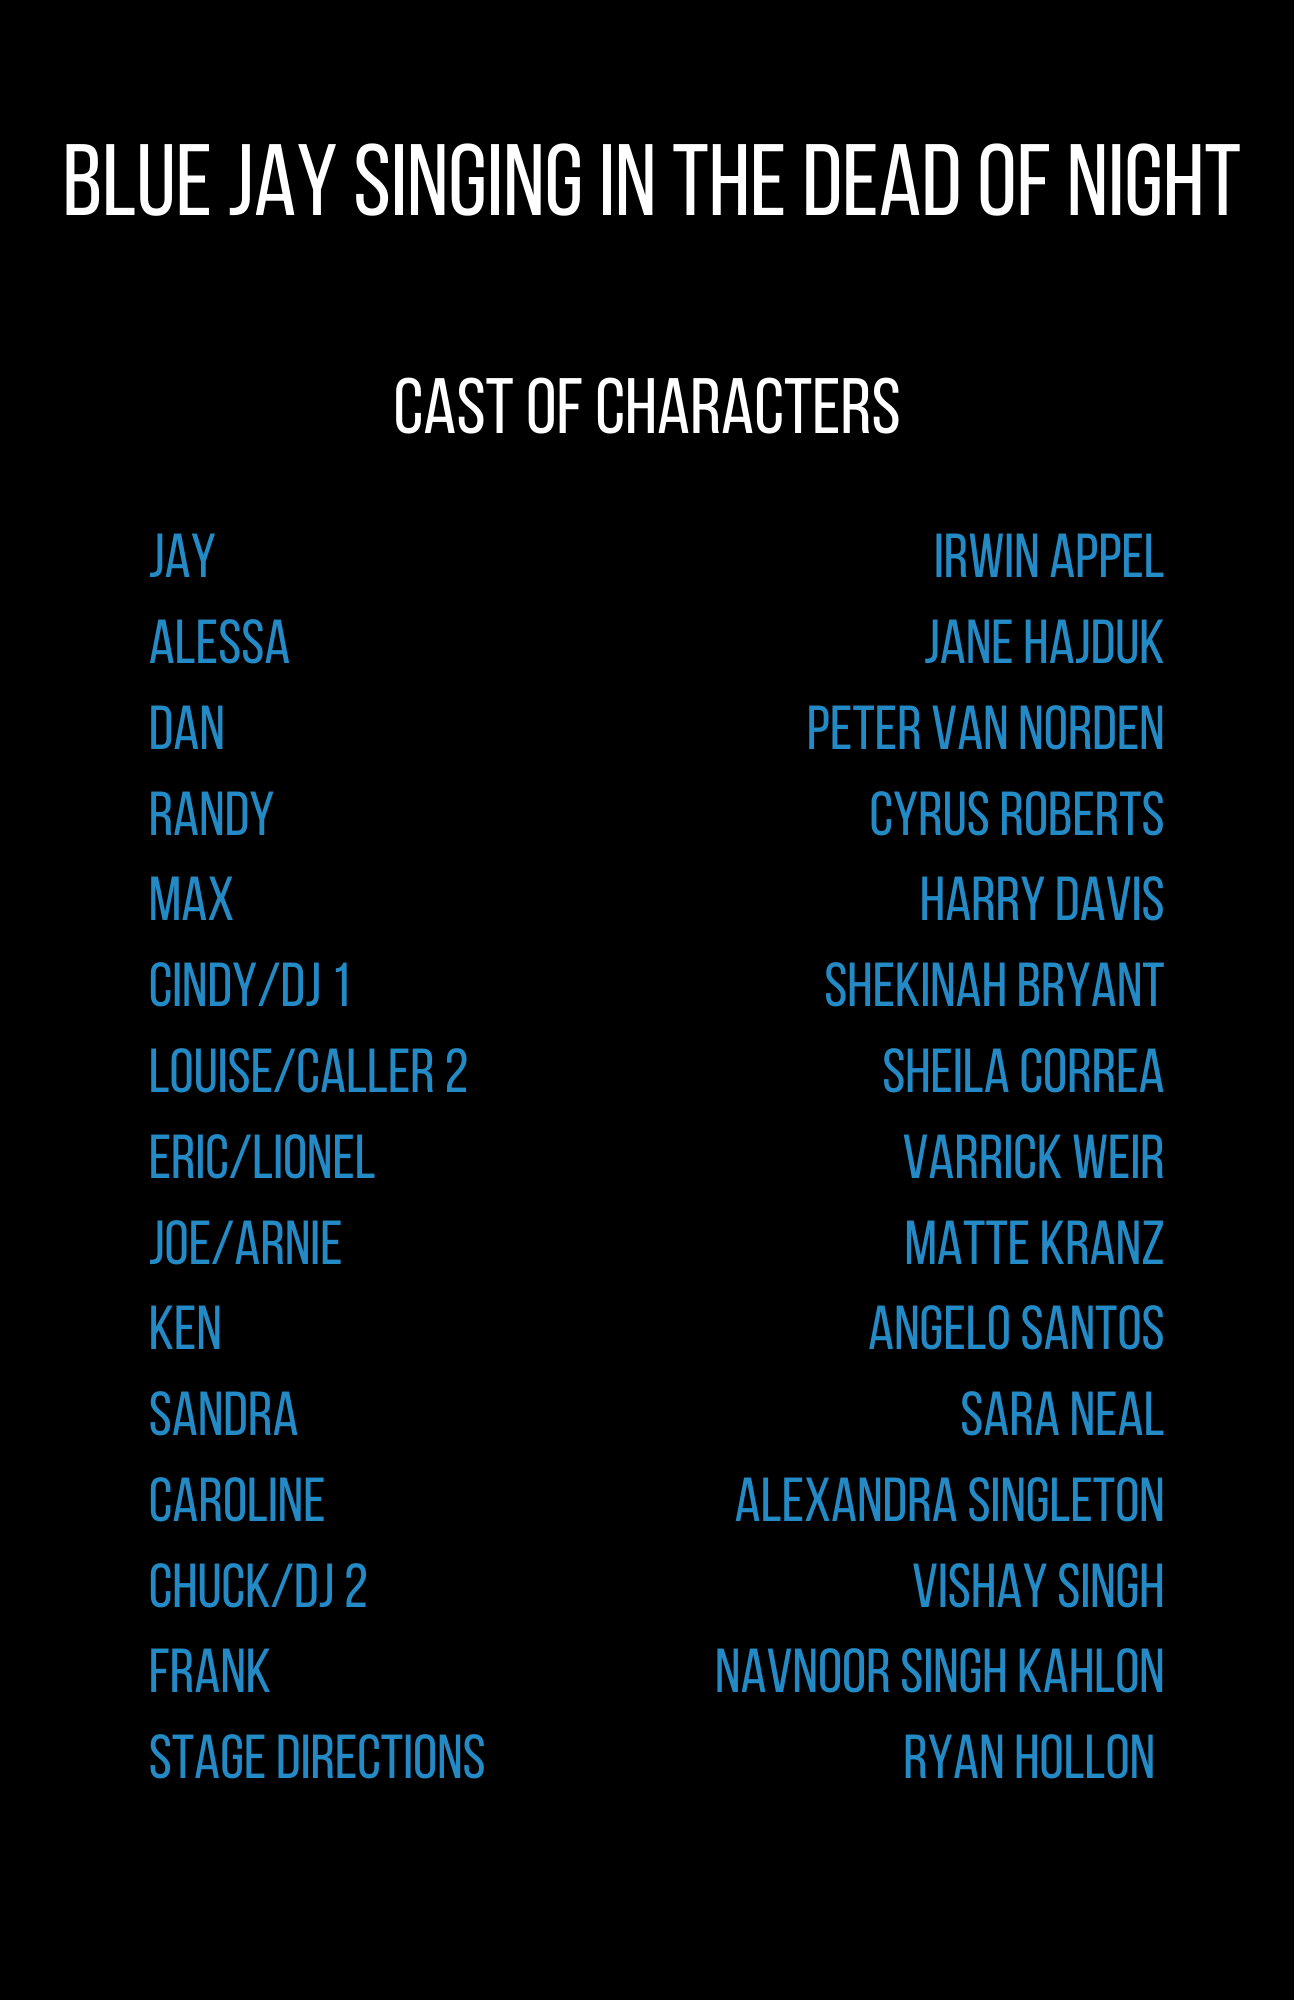 cast list from BLUE JAY program